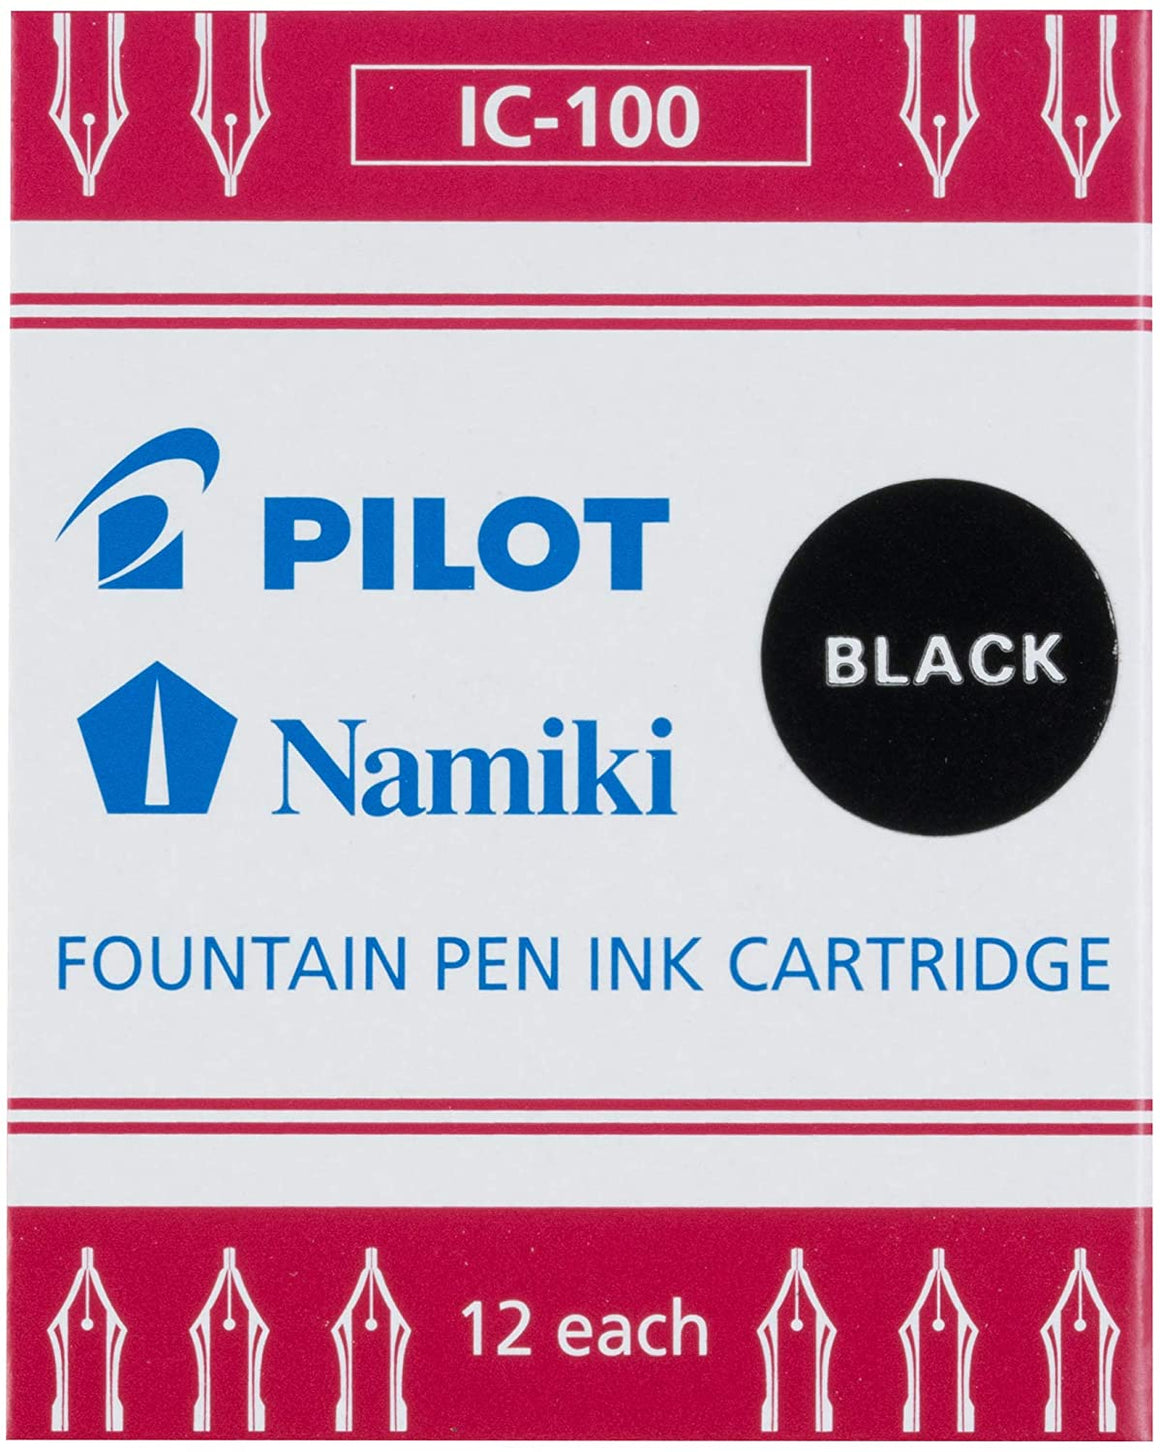 Pilot Nimiki Pen Ink Refill - Pilot IC100